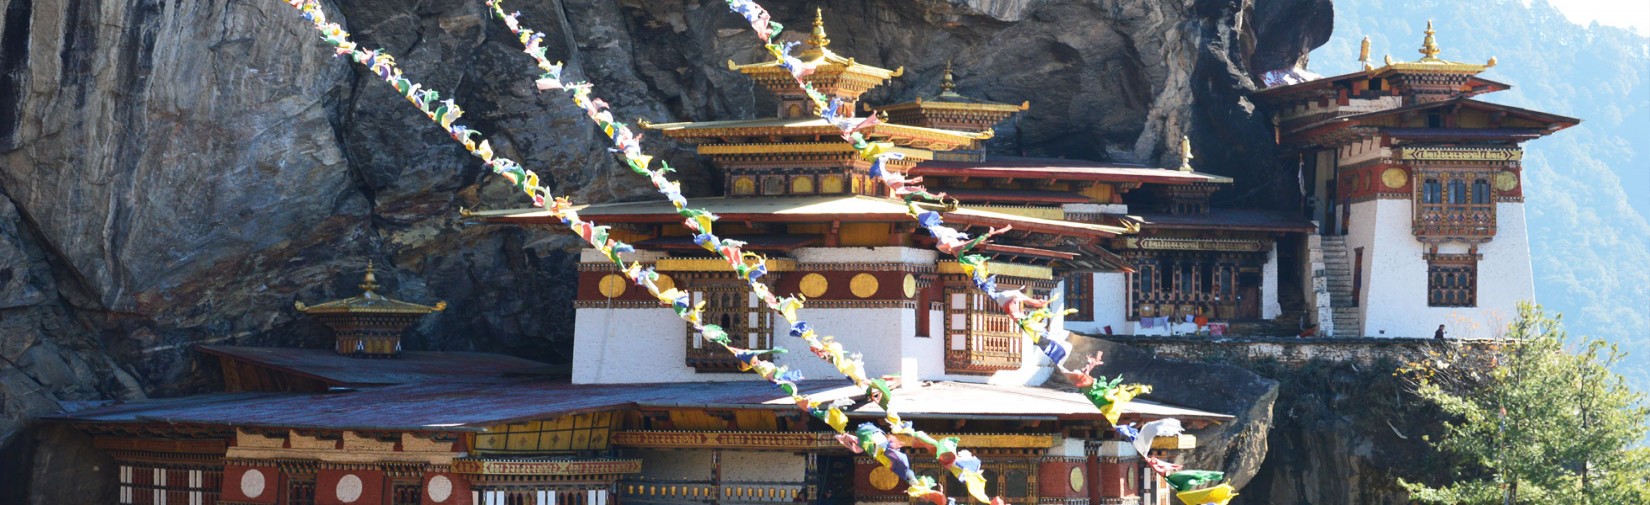 Tiger Nest Monastery 